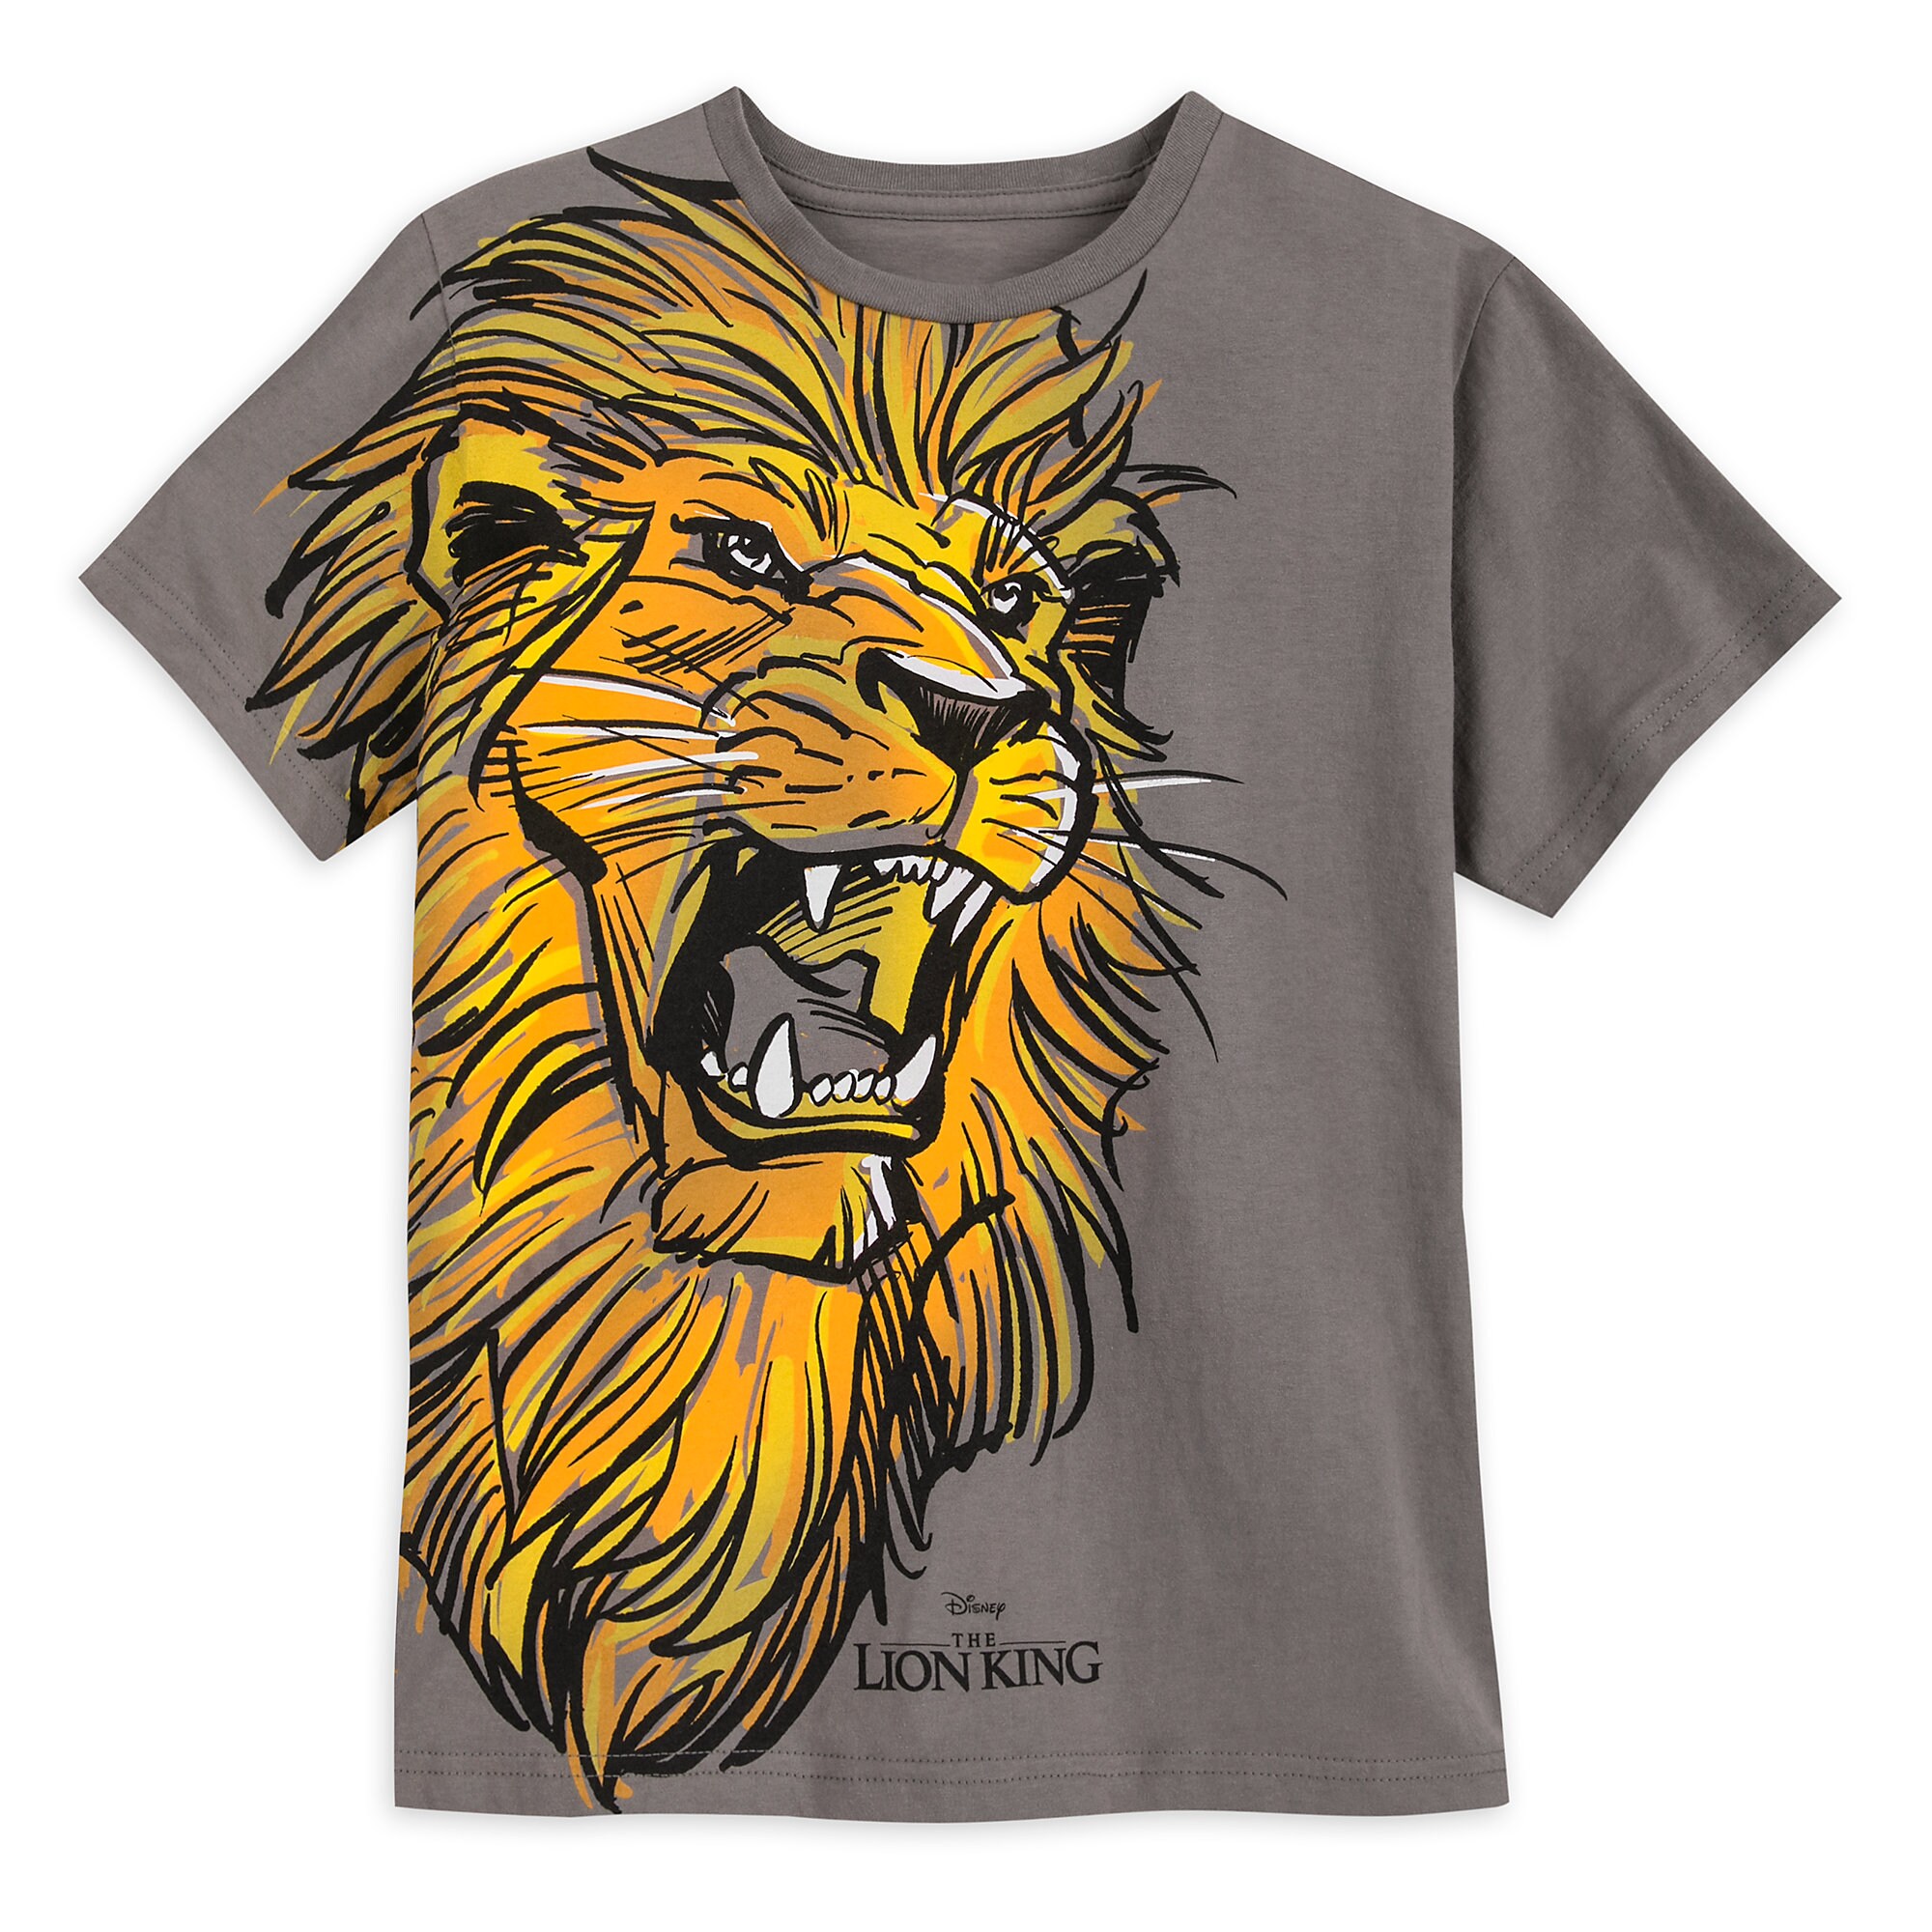 Simba T-Shirt for Boys - The Lion King 2019 Film